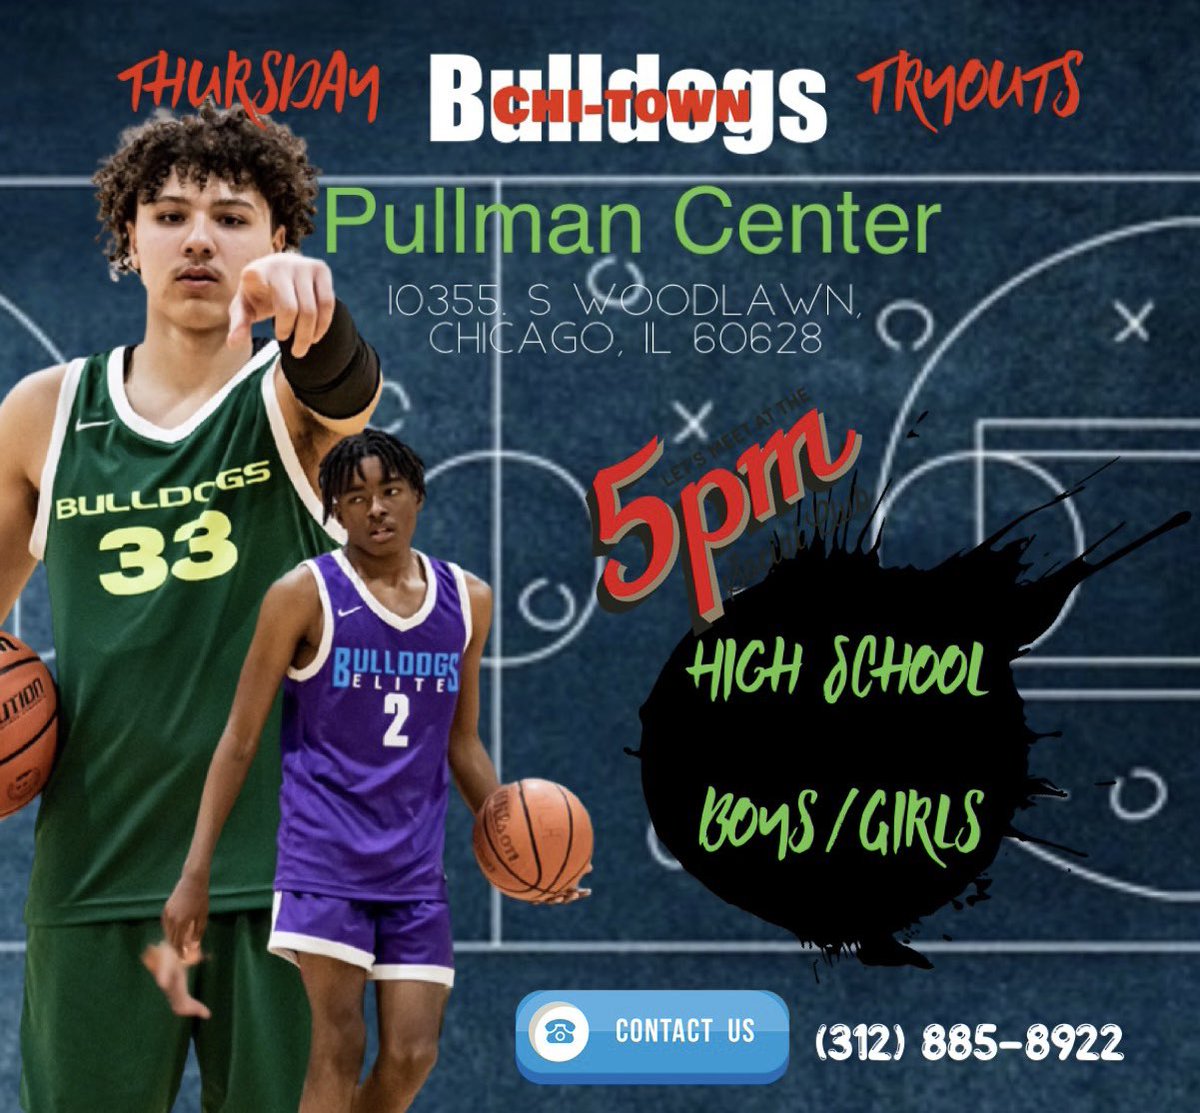 Meet Us There!!!! #BulldogsBasketball